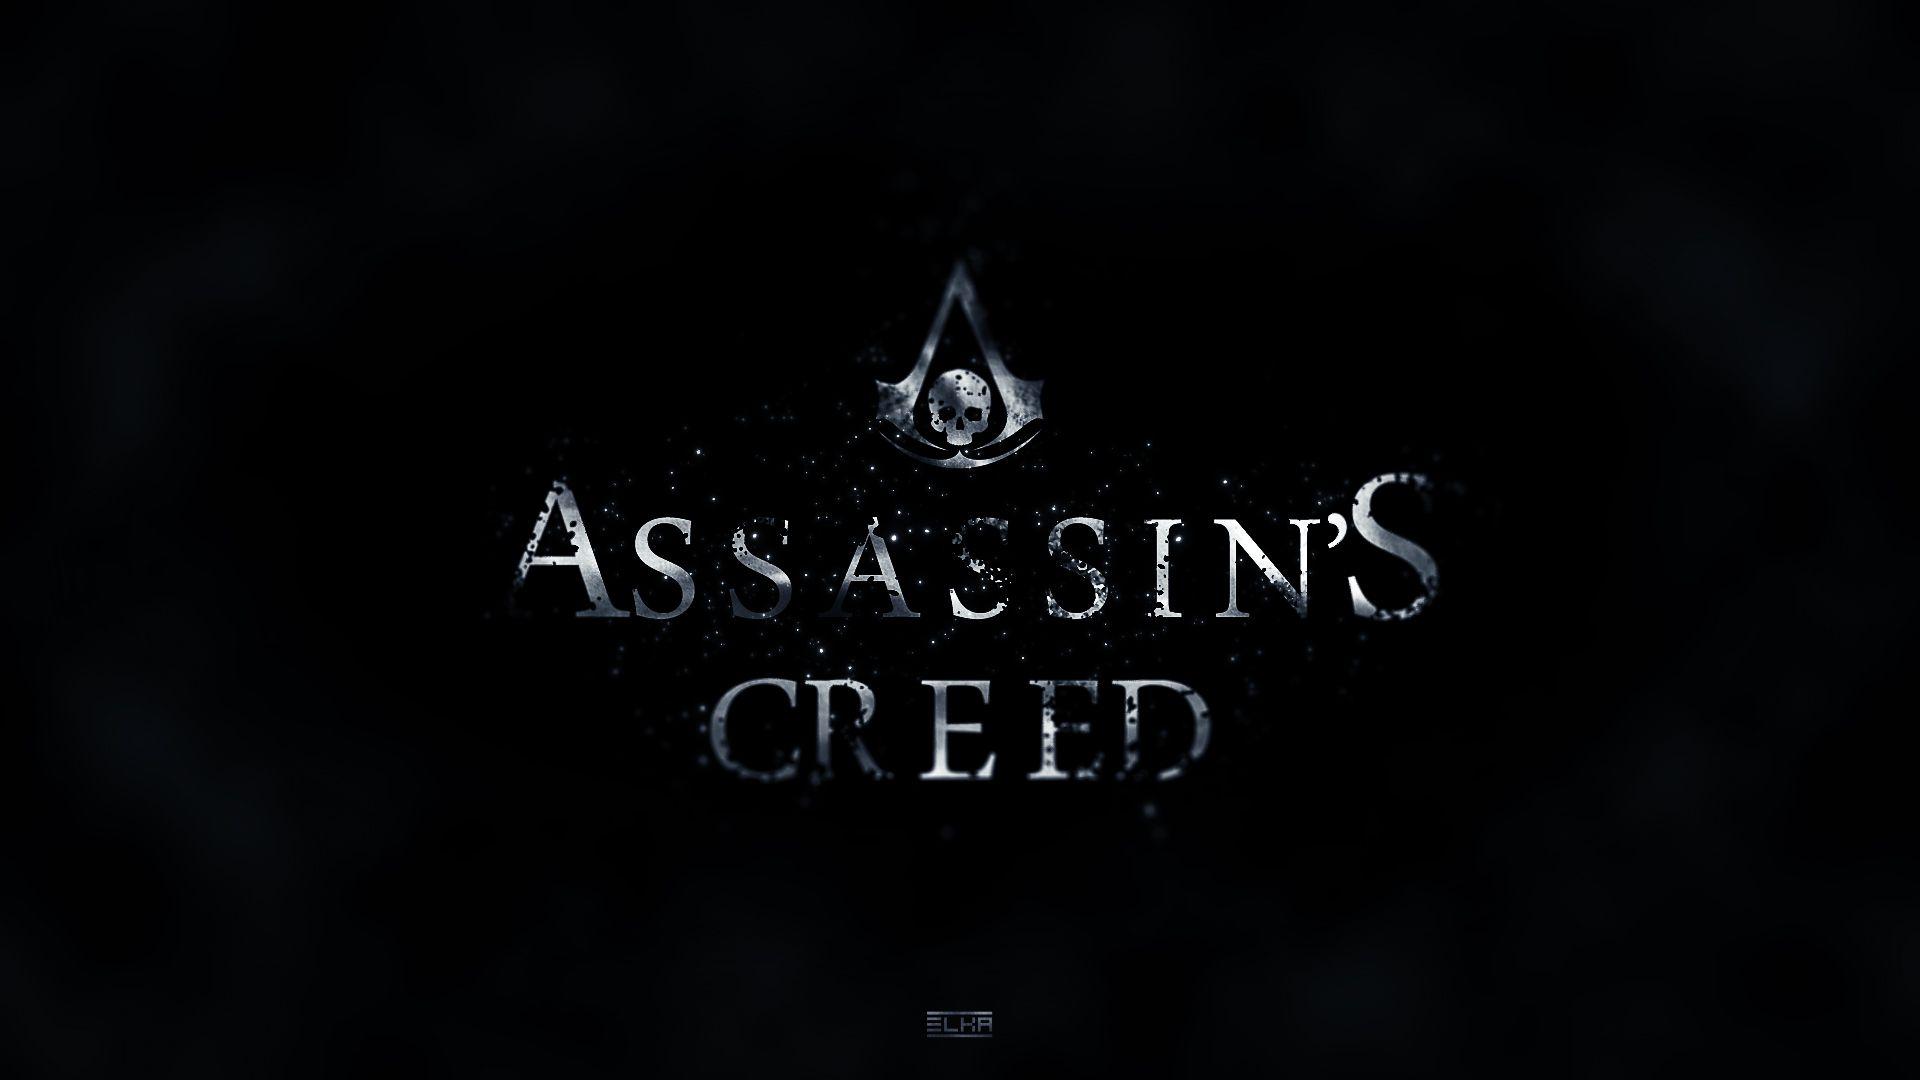 Assassin&;s creed 4 logo&;s creed 4 wallpaper